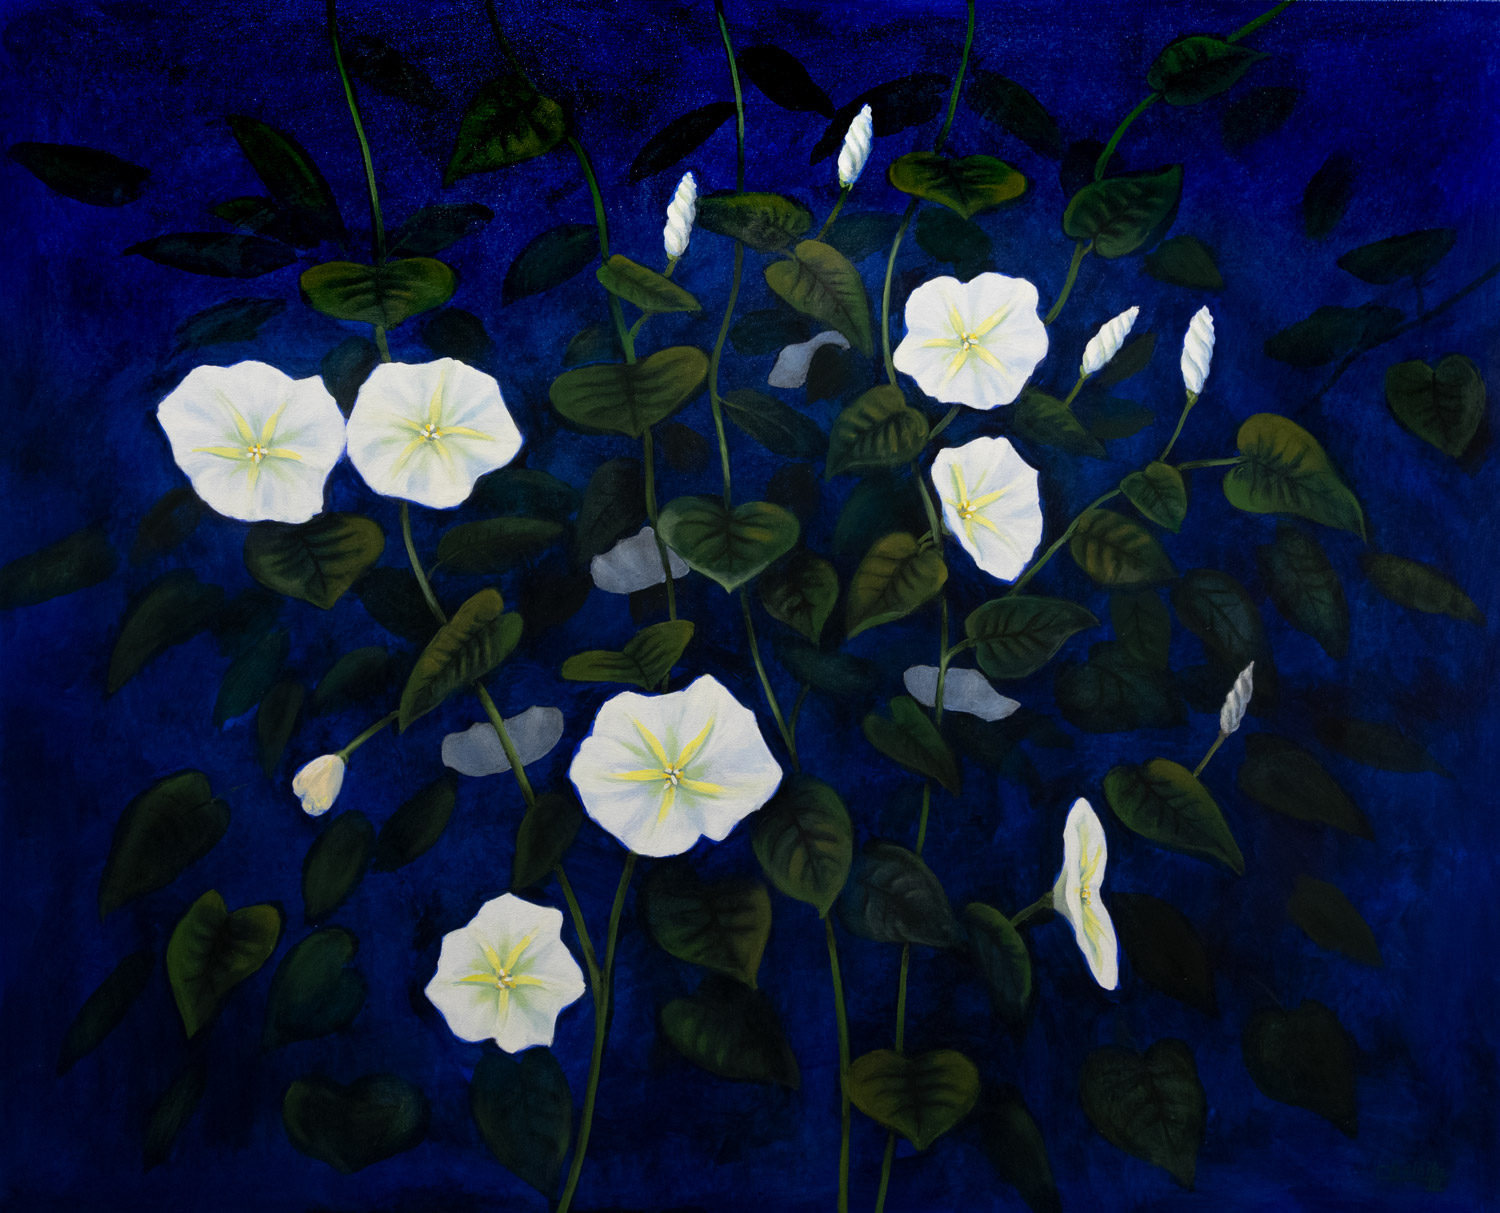 Moonflowers on Blue 42 X 52 by Charles H. Reinike III